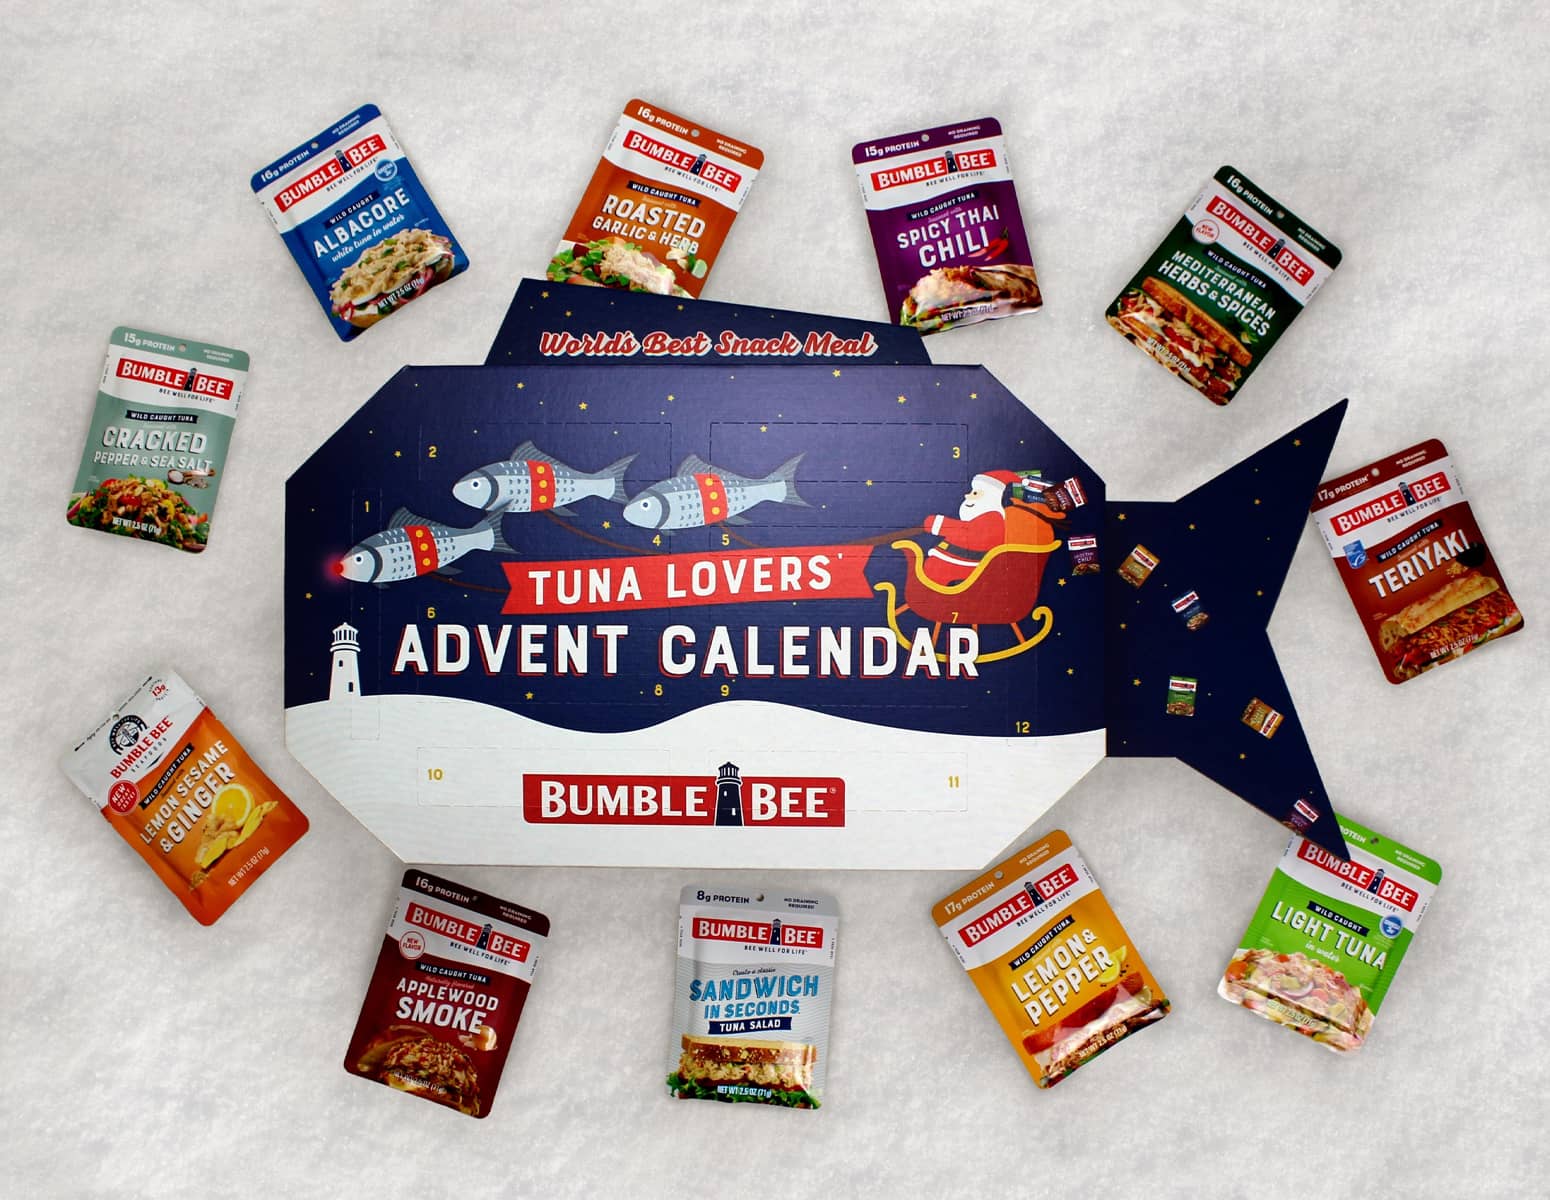 Bumble Bee Tuna Lovers' Advent Calendar